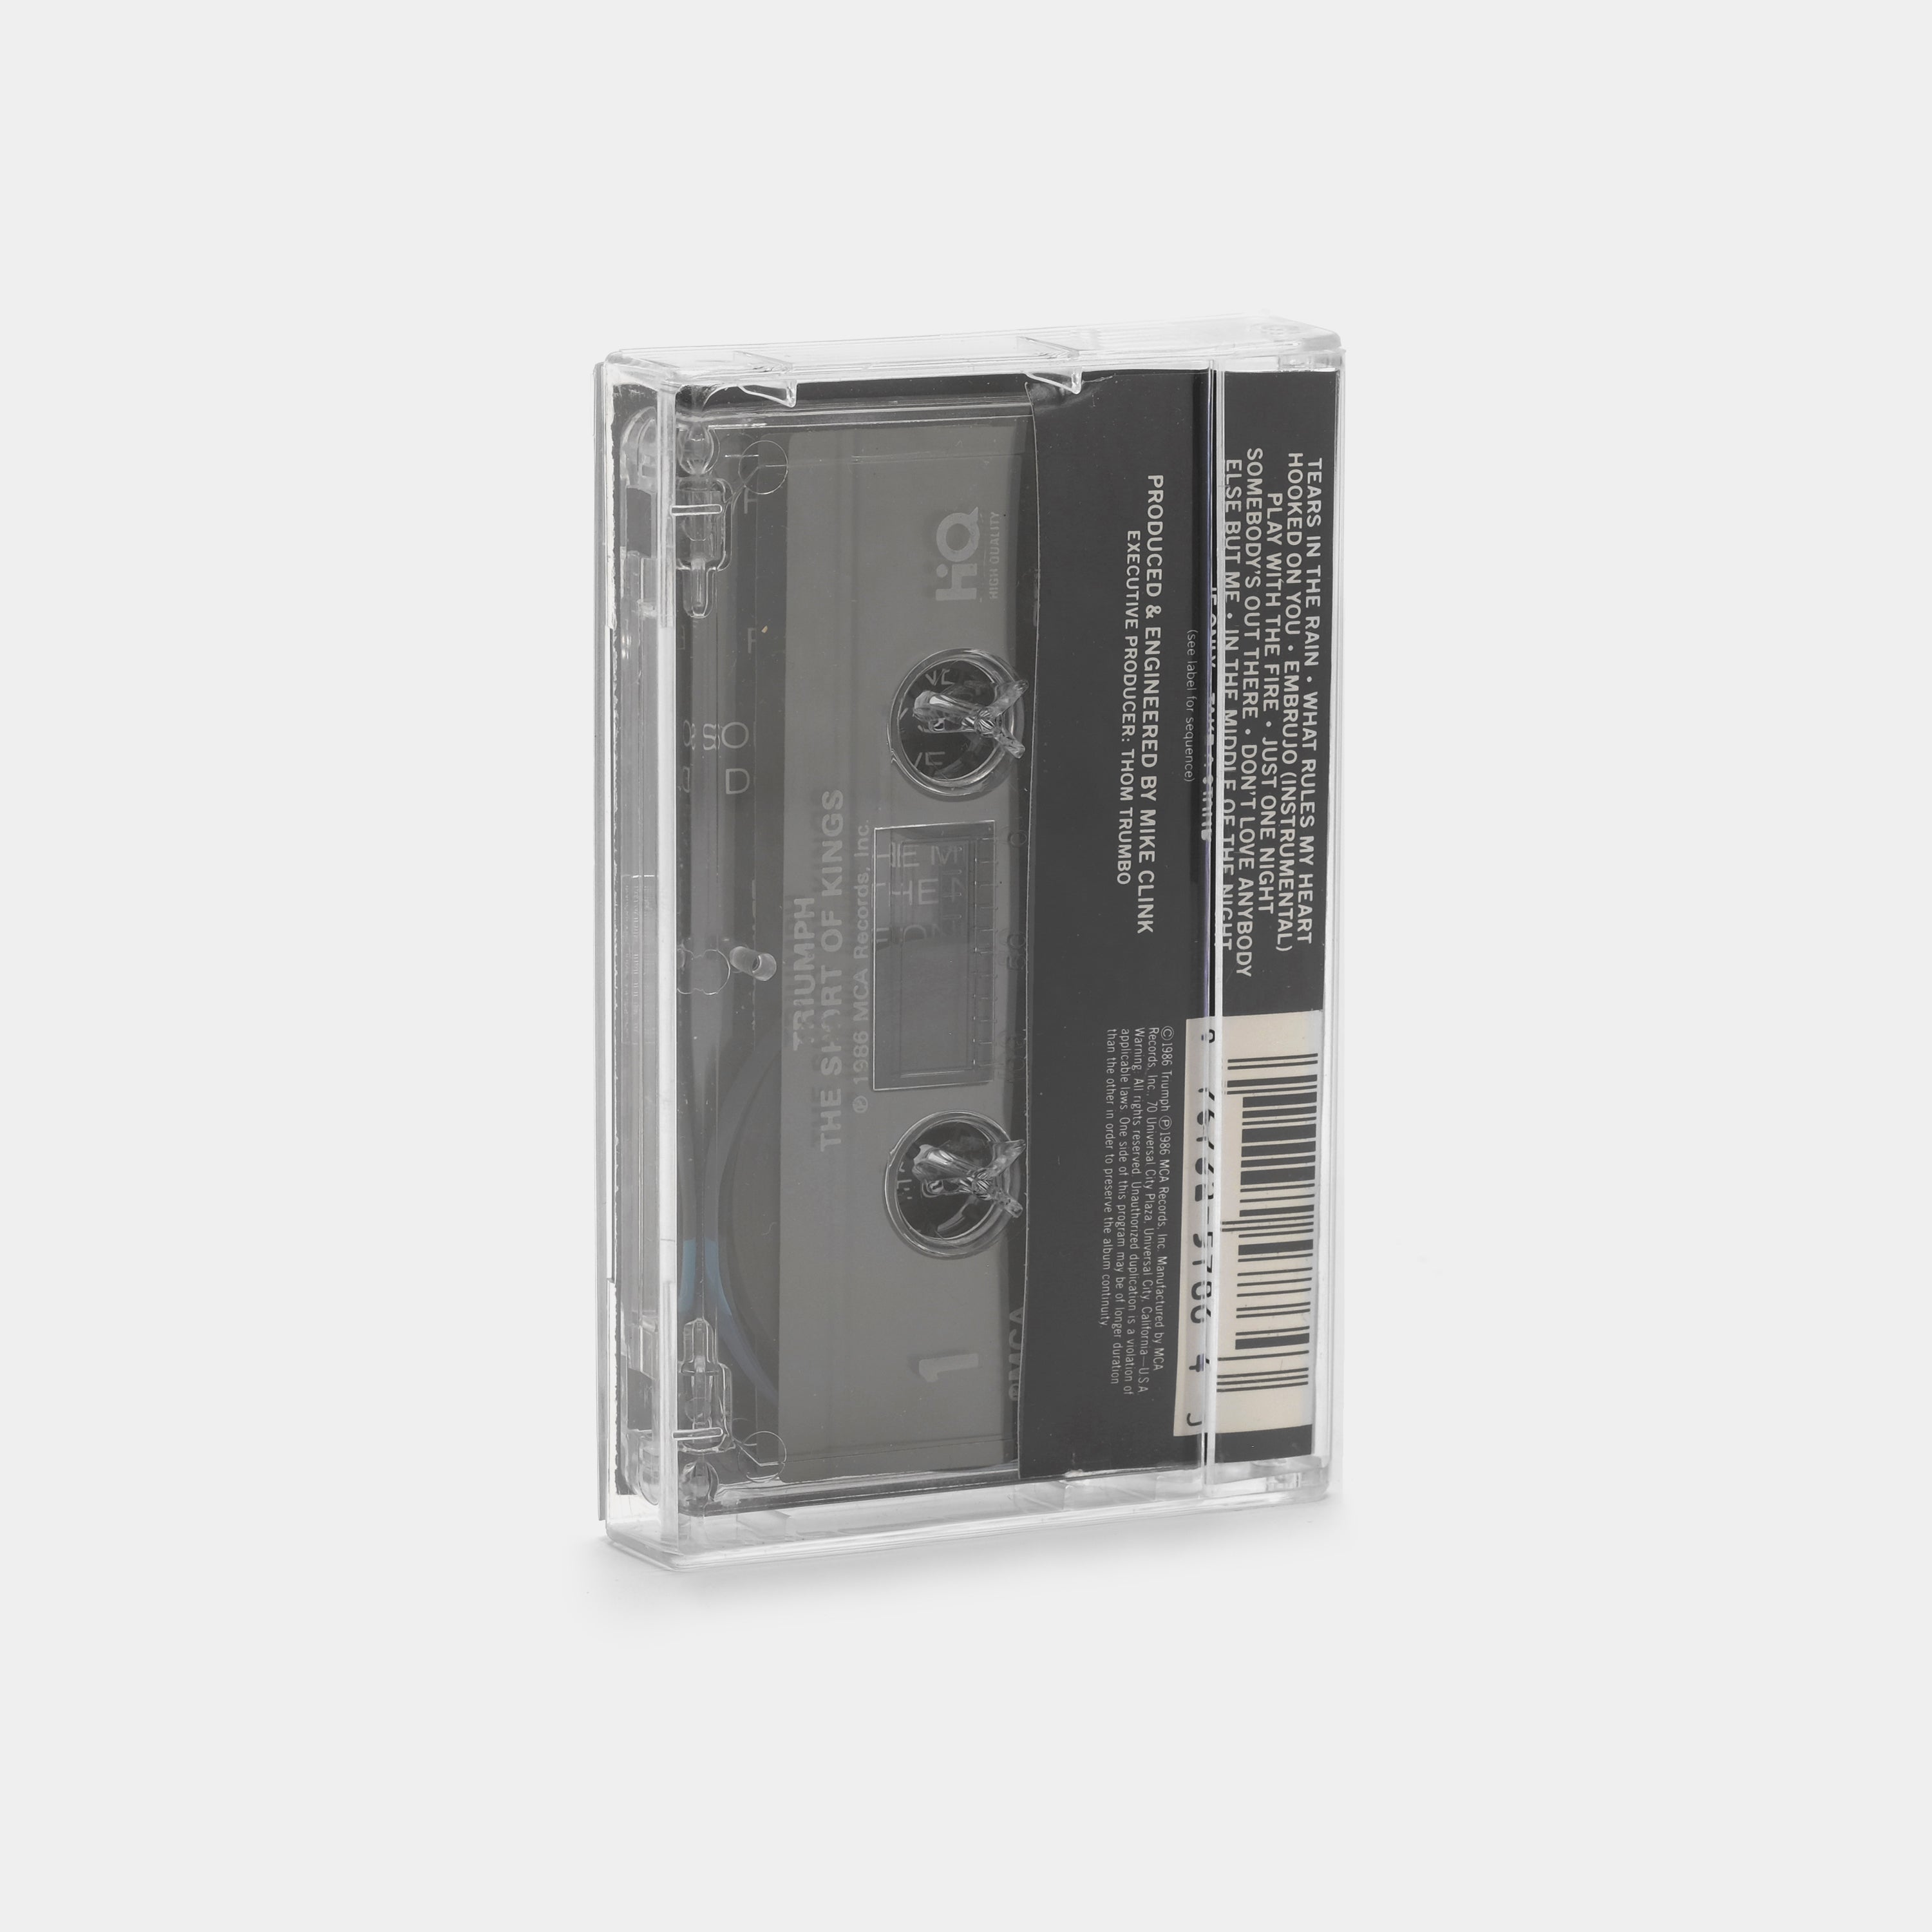 Triumph - The Sport Of Kings Cassette Tape